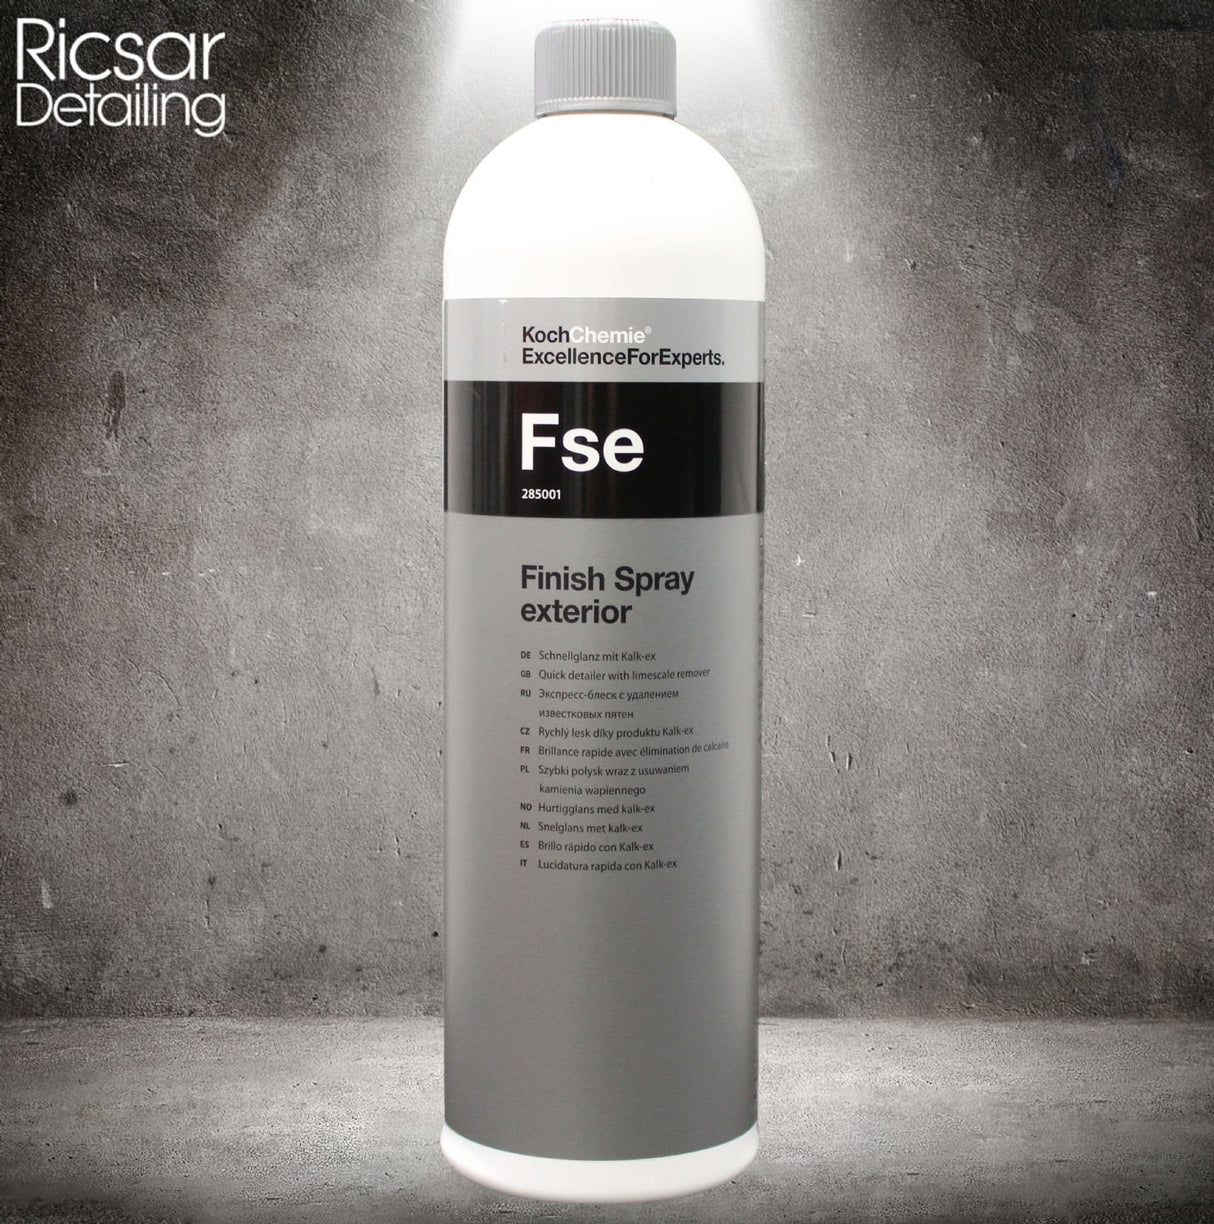 Koch Chemie FSE Finish Spray Exterior Rapid Detailer Spray With Limescale Remover